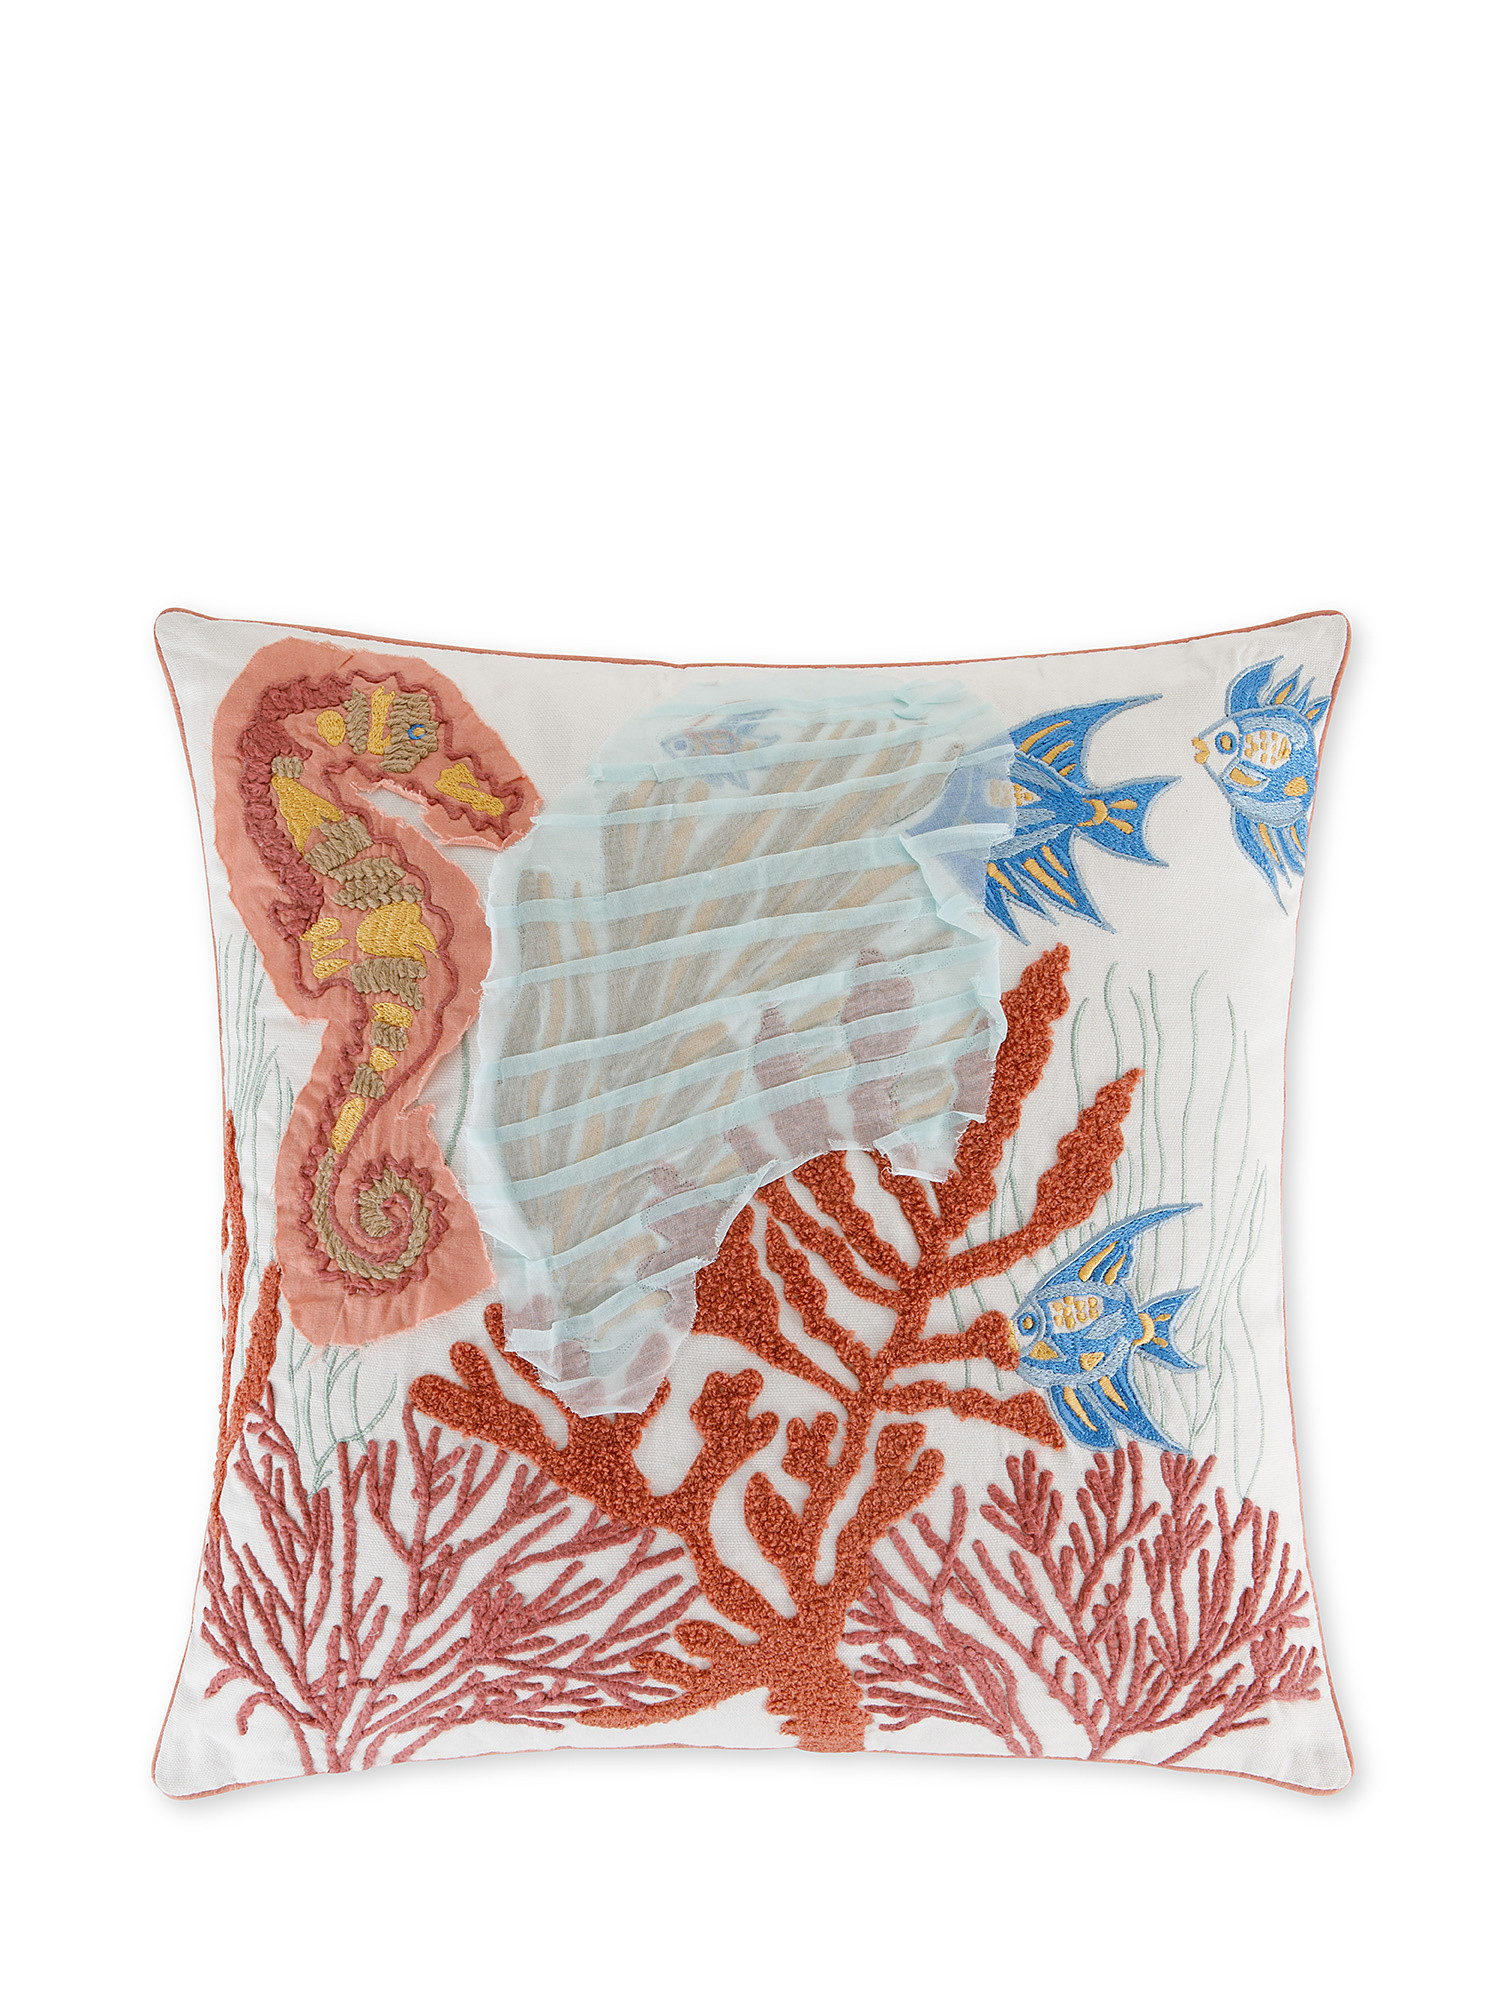 Horse embroidery cushion 45x45cm, White, large image number 0